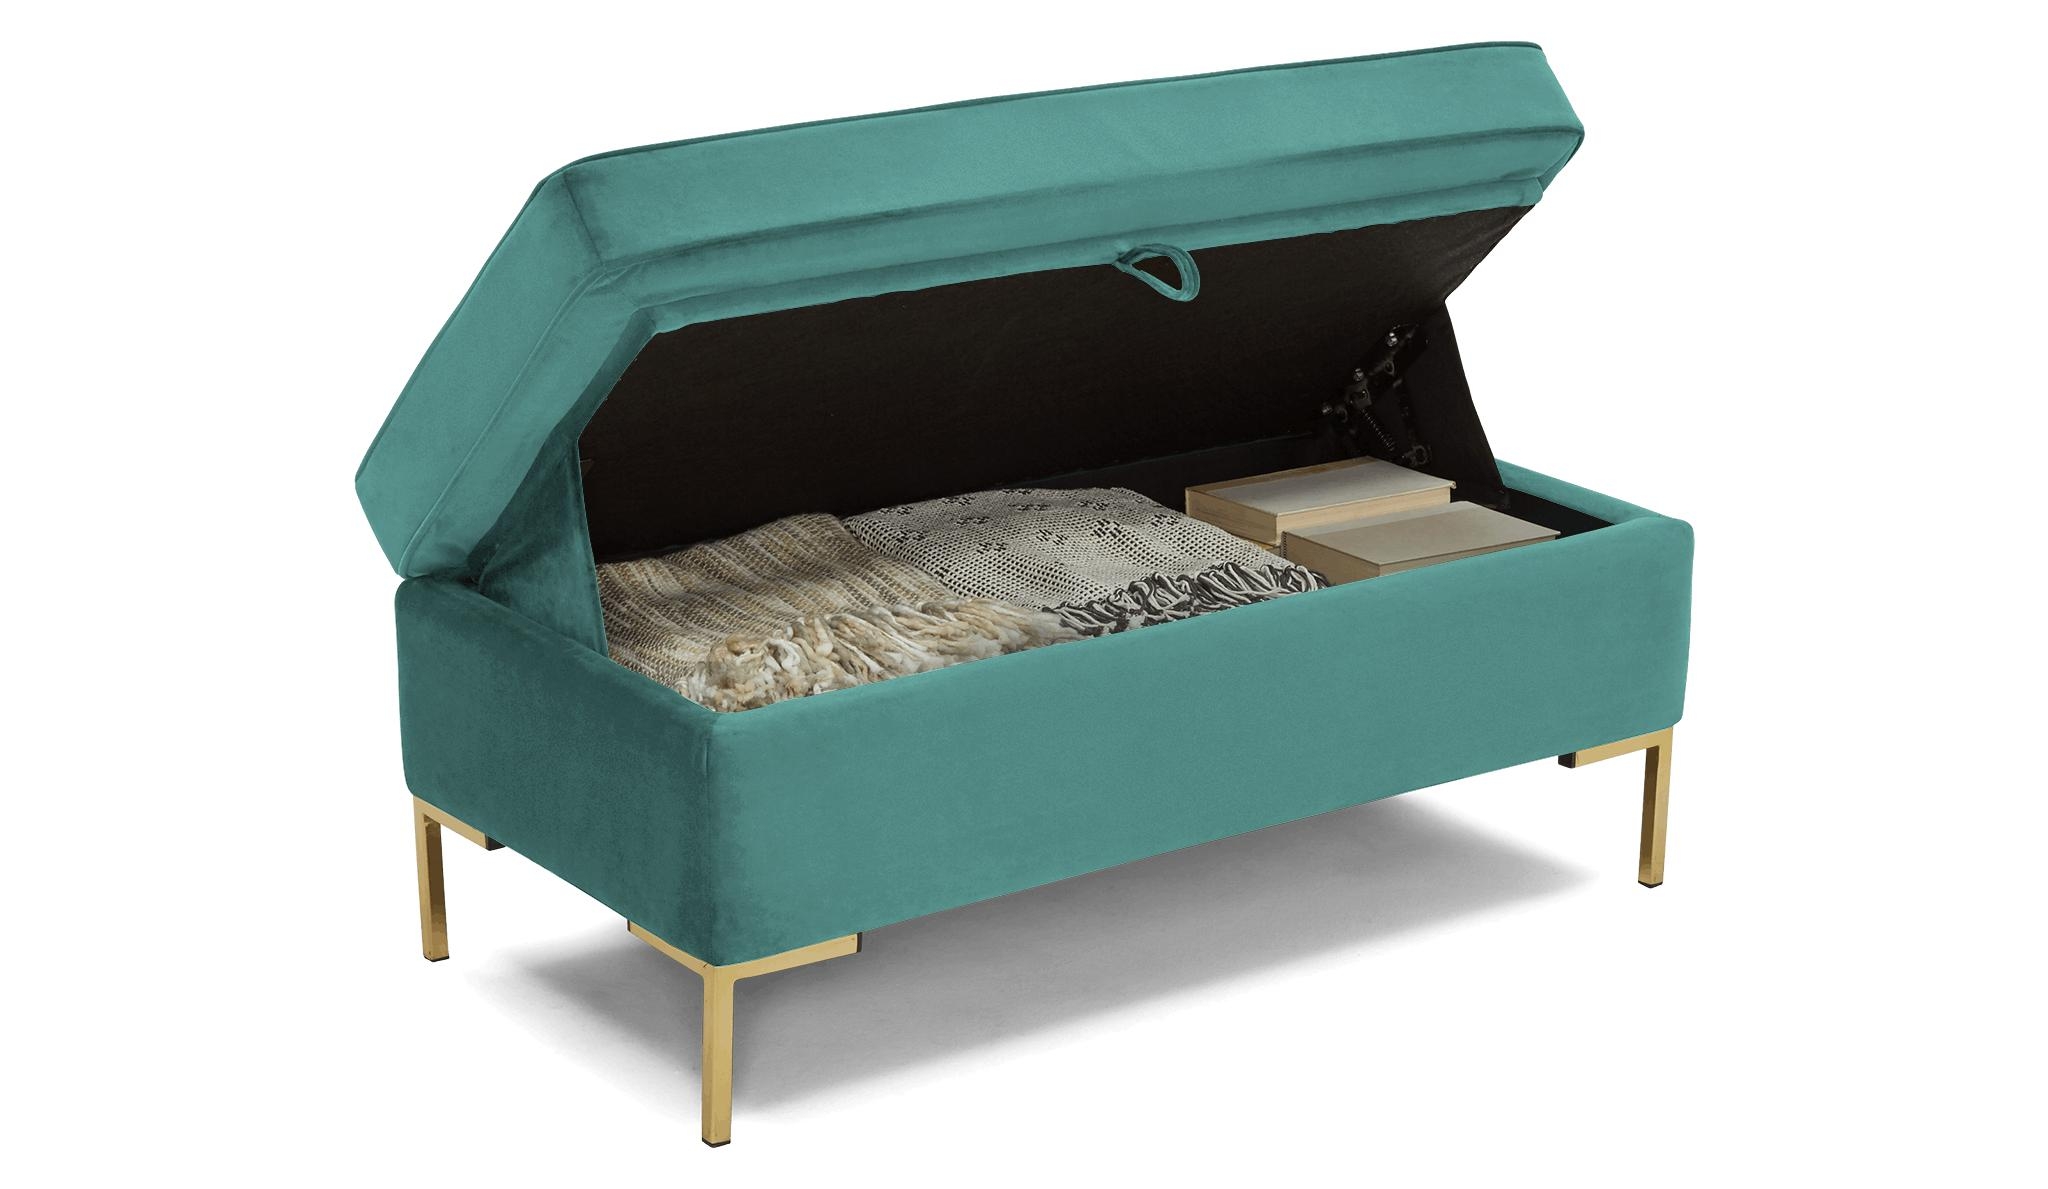 Green Dee Mid Century Modern Bench with Storage - Essence Aqua - Image 2